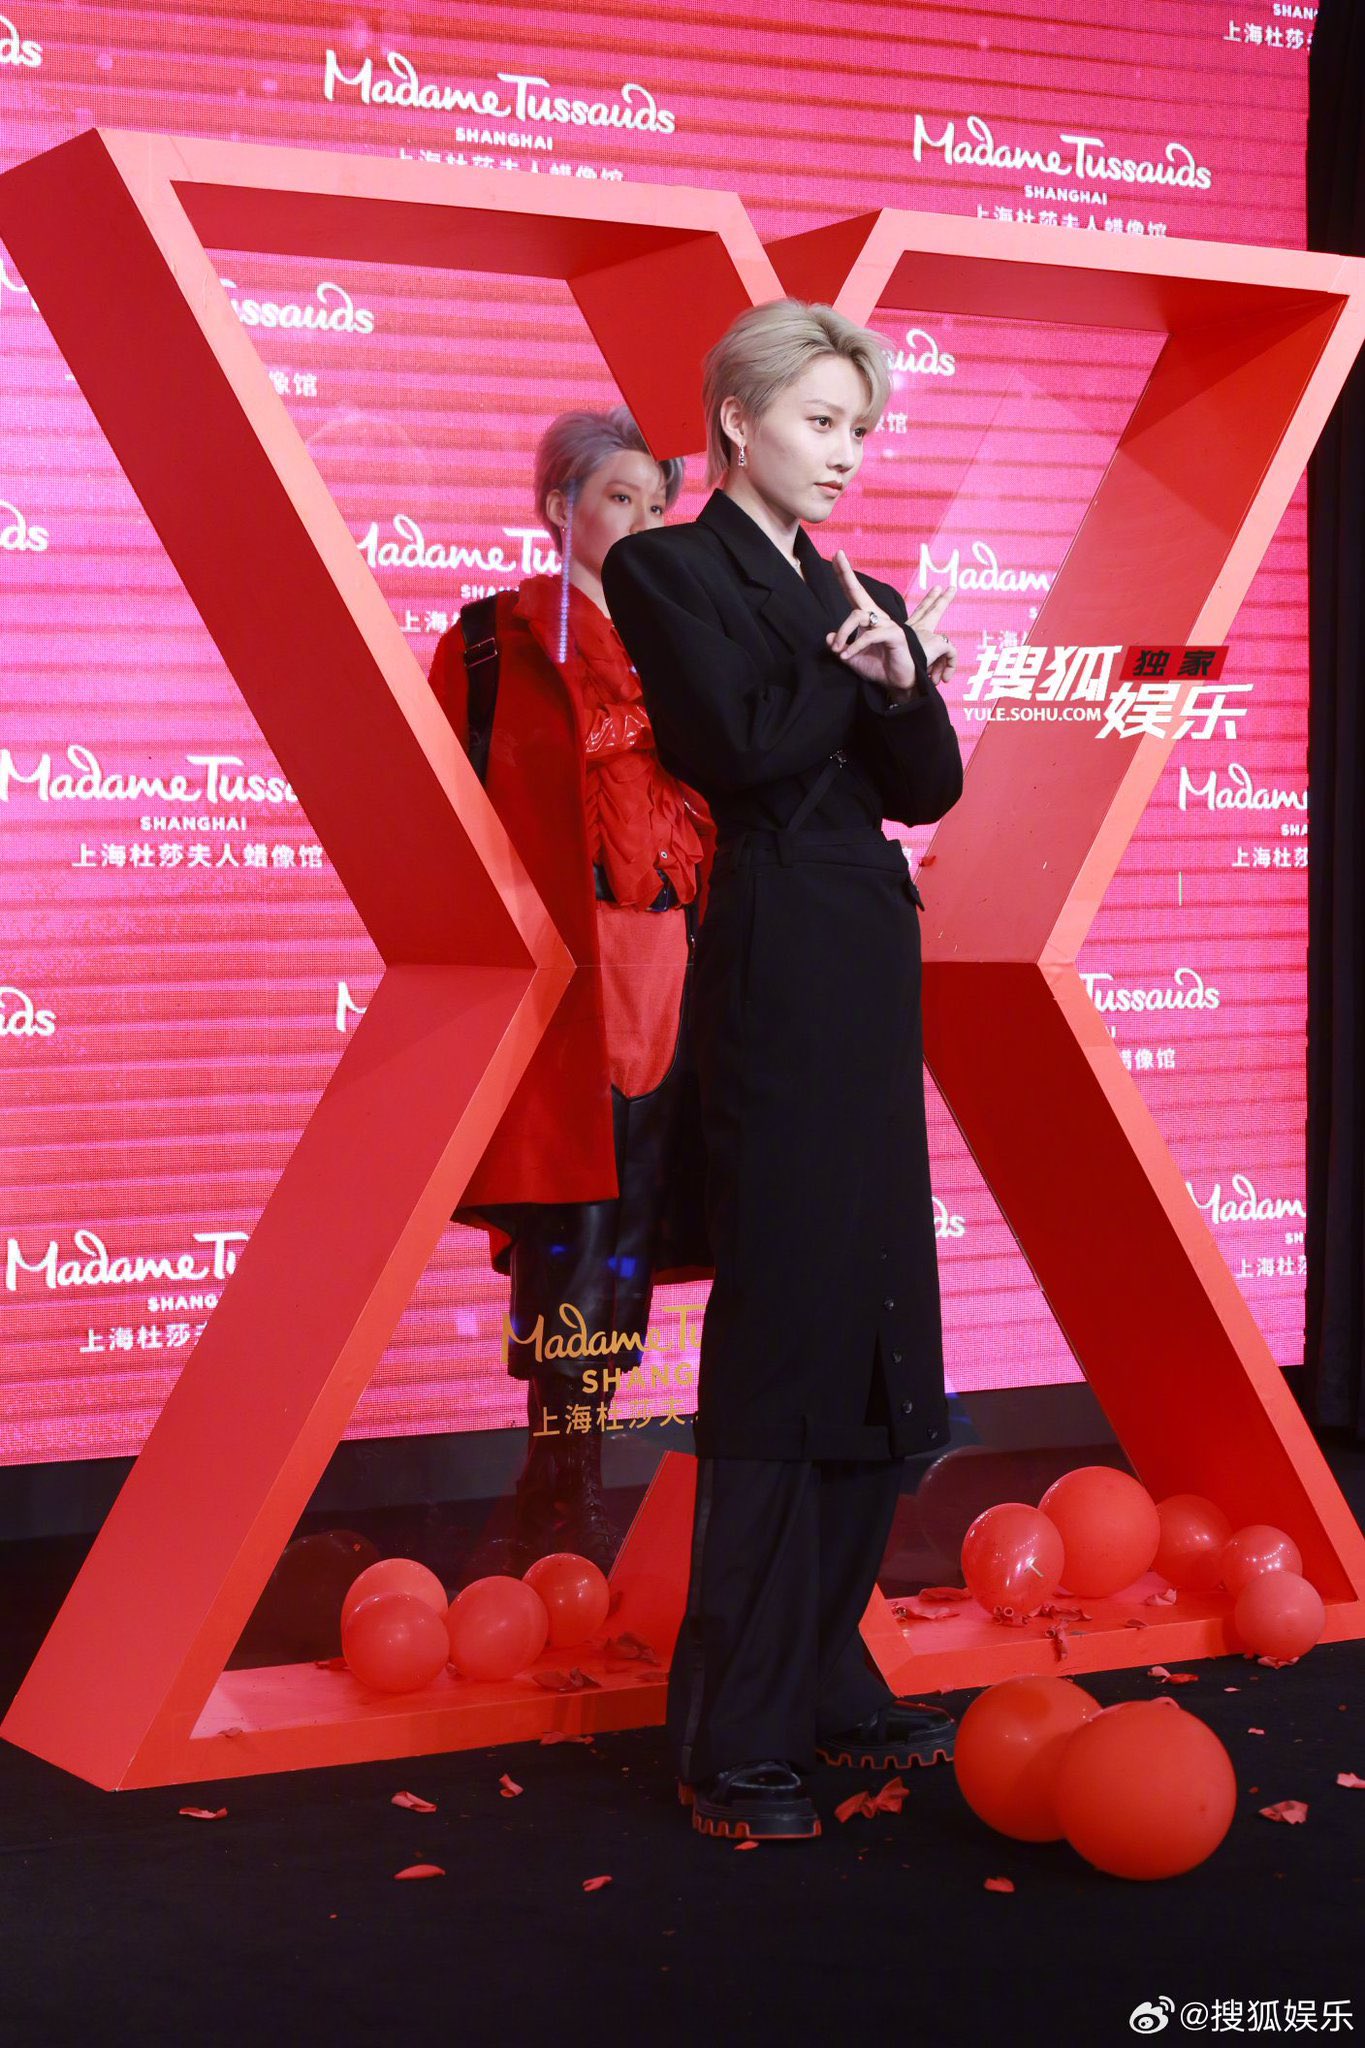 X 上的cdrama tweets：「Zhou Dongyu's wax figurine was unveiled today at  Beijing's Madame Tussauds! #周冬雨#zhoudongyu  / X